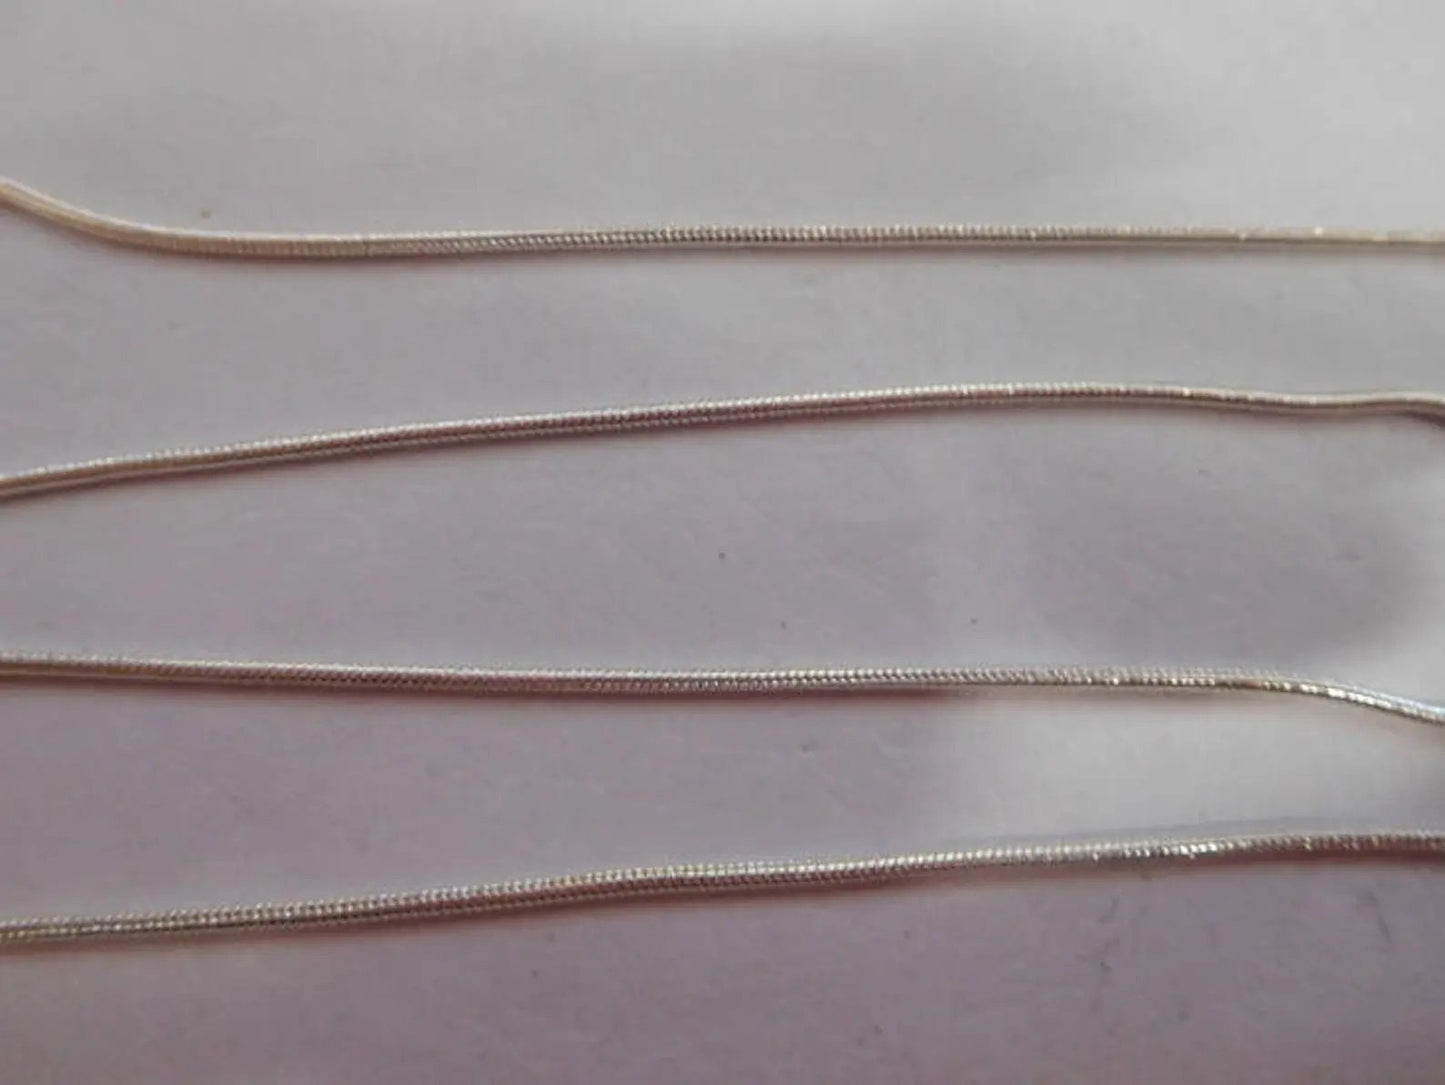 Ametrine necklace // Ametrine crystal // Ametrine pendant // with sterling silver bail